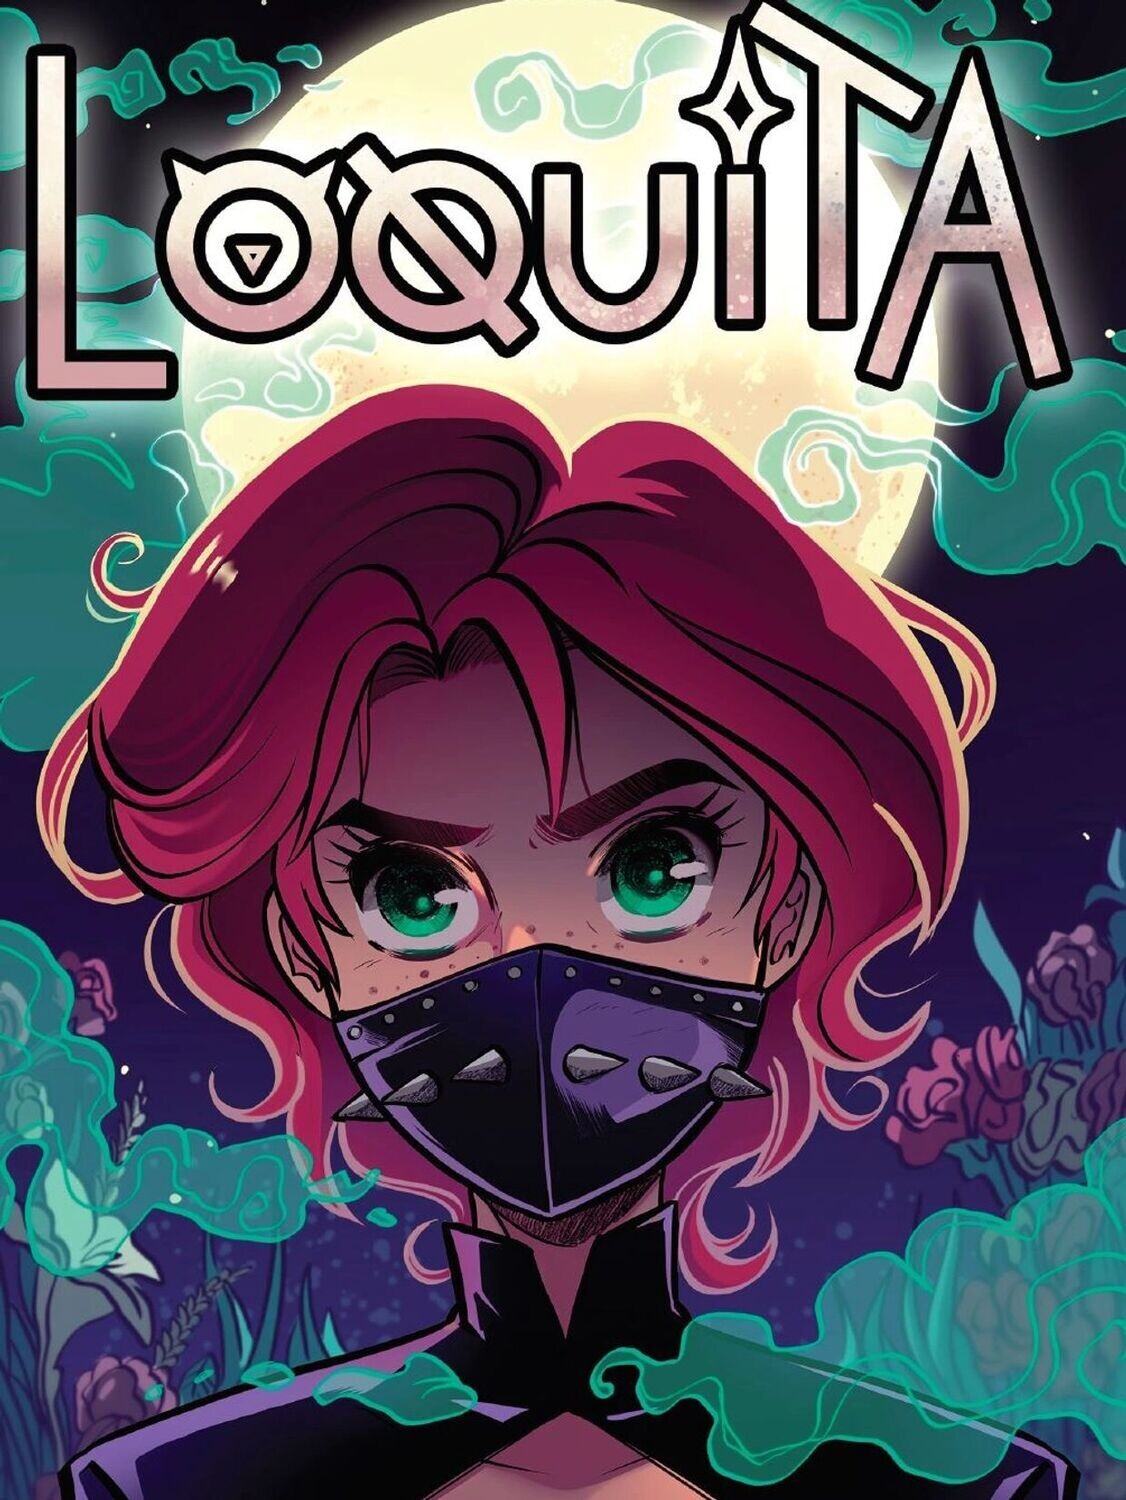 Loquita Graphic Novel (by Kayden Phoenix)